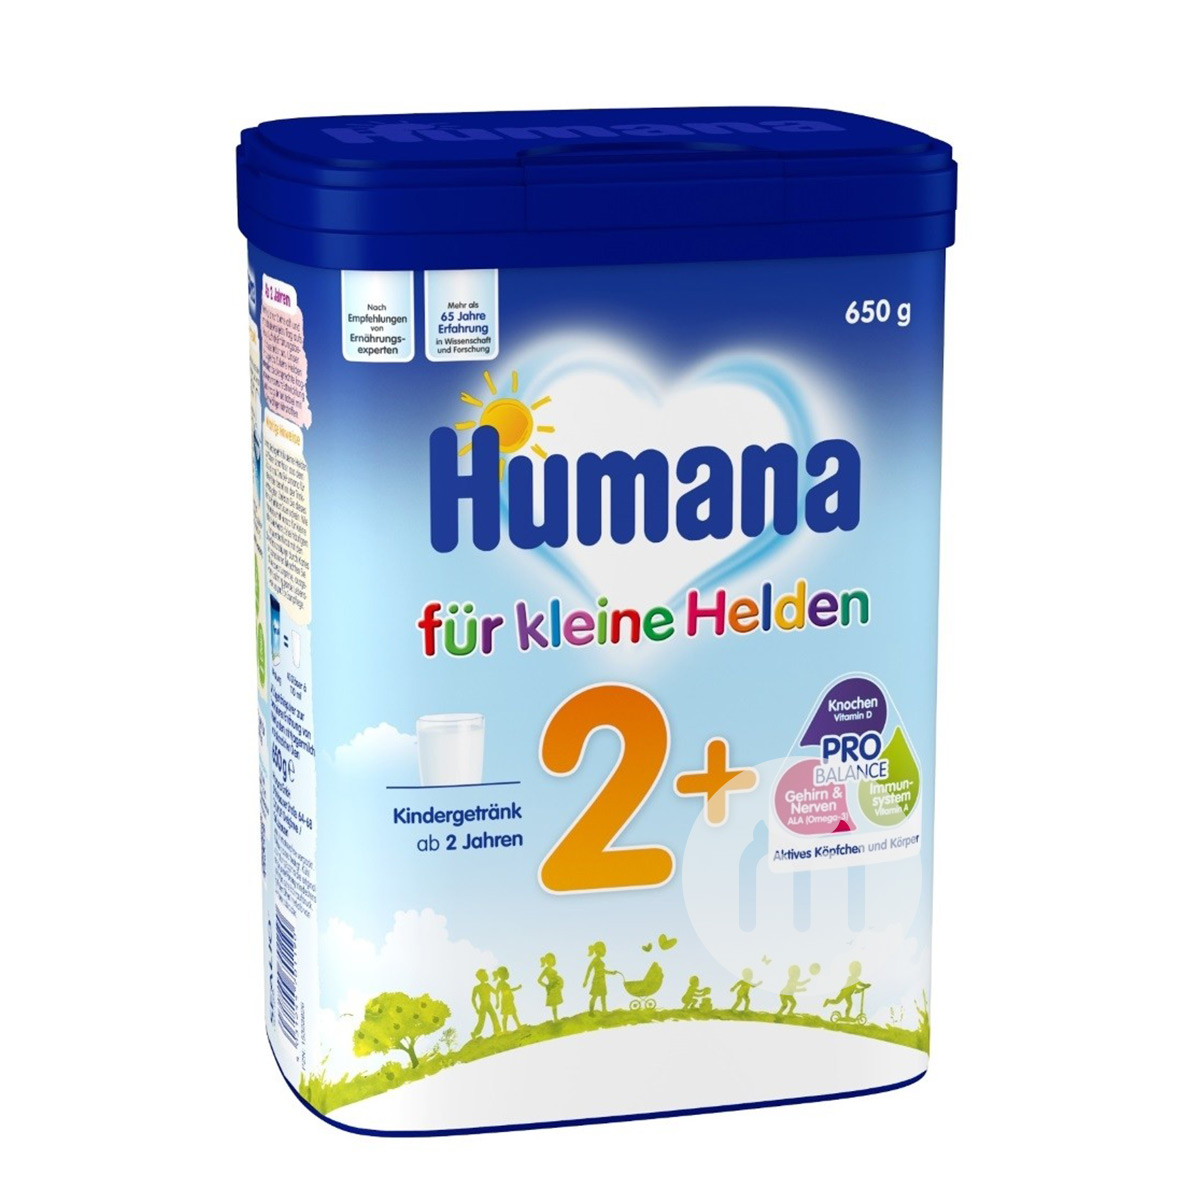 Humana 德國瑚瑪娜嬰兒奶粉2+段650g*4盒 海外本土原版